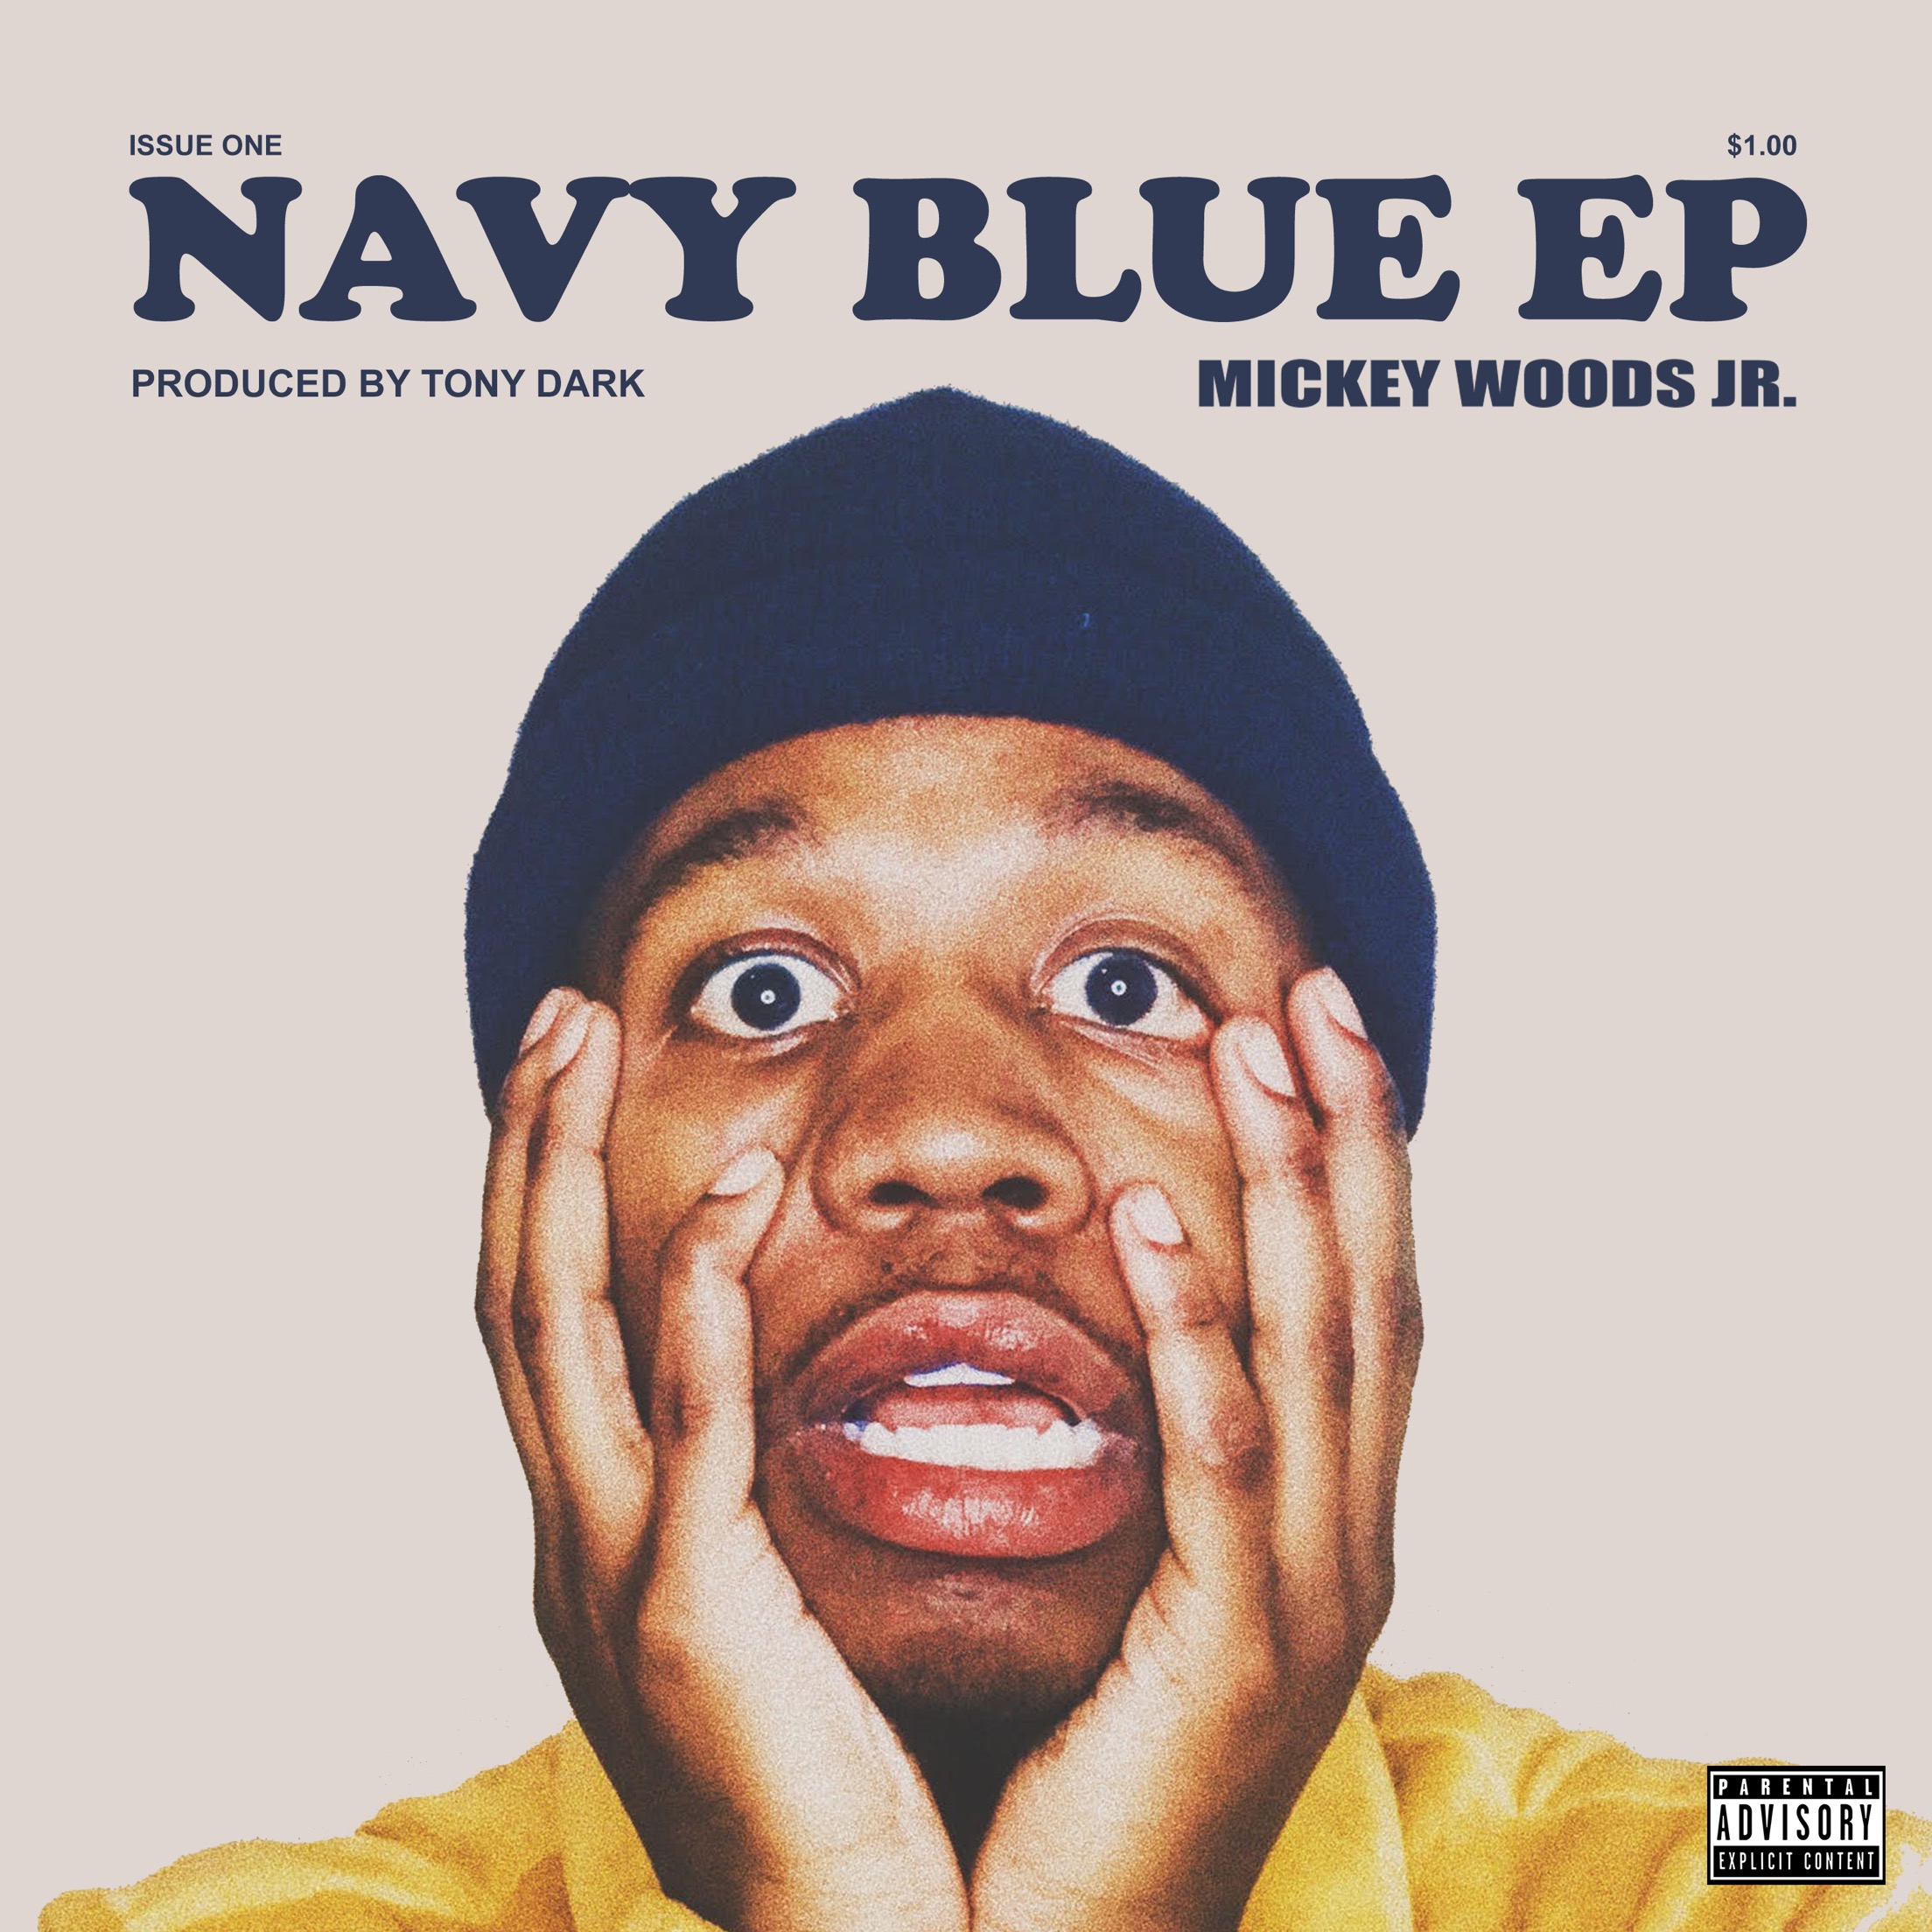   Mickey Woods Jr. &amp; Tony Dark - Navy Blue EP    03. Navy Blue Saxophone Seb Zillner  06. Untitled Duduk Seb Zillner   © 2018 Mickey Woods Jr.  Listen on Spotify  